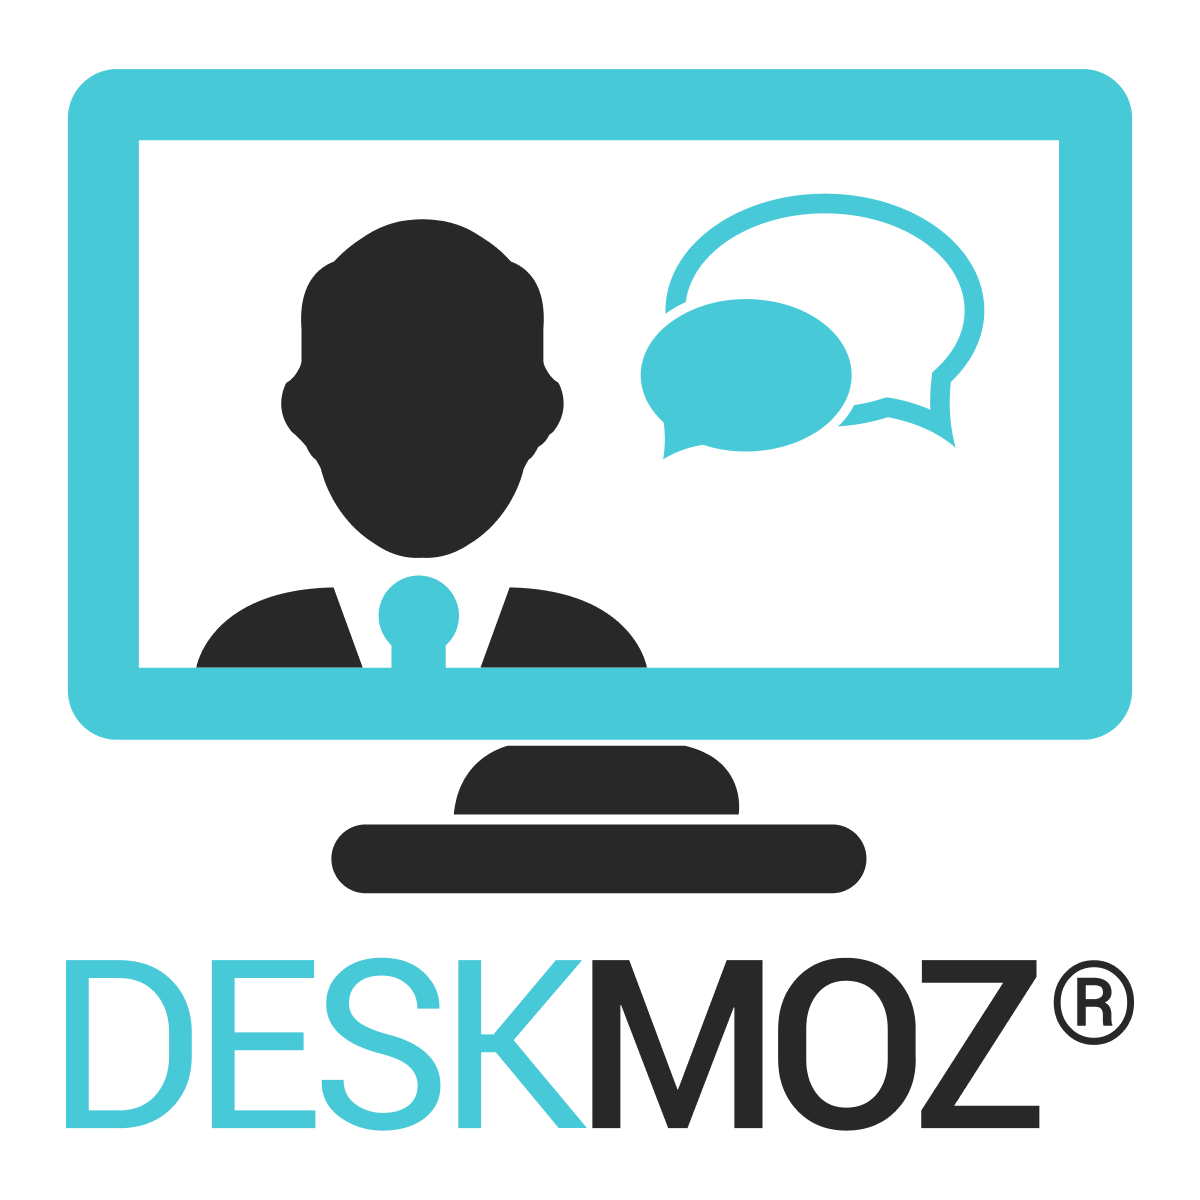 DeskMoz ‑24x7 Live Chat Agents